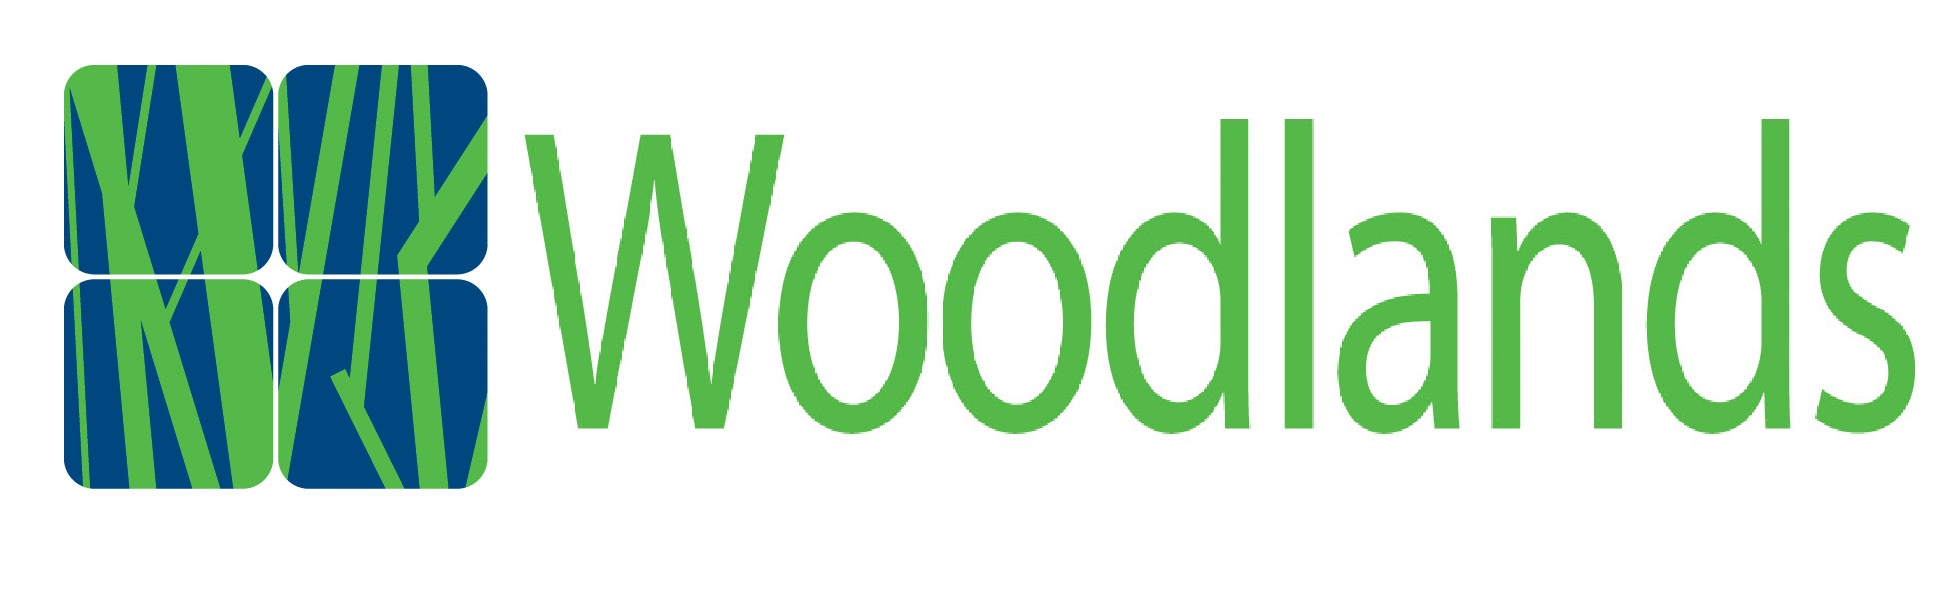 Woodlands Community College DTP school logo